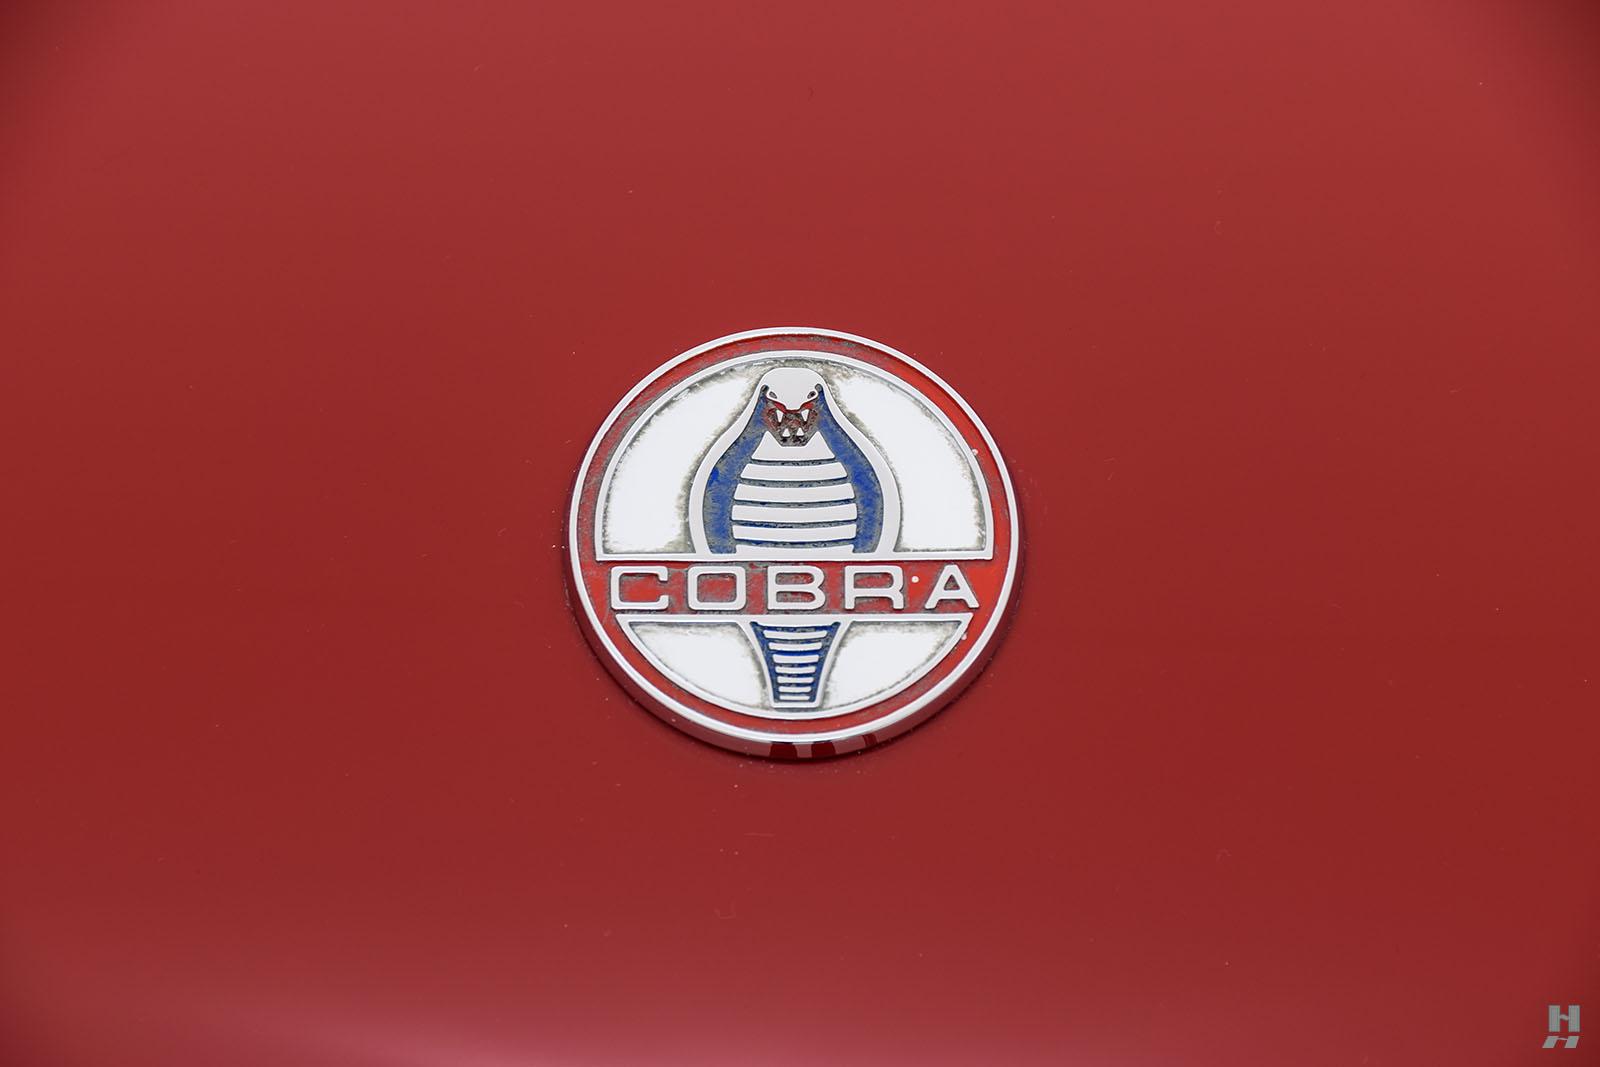 1967 shelby cobra 427 (csx3300 - csx3360)